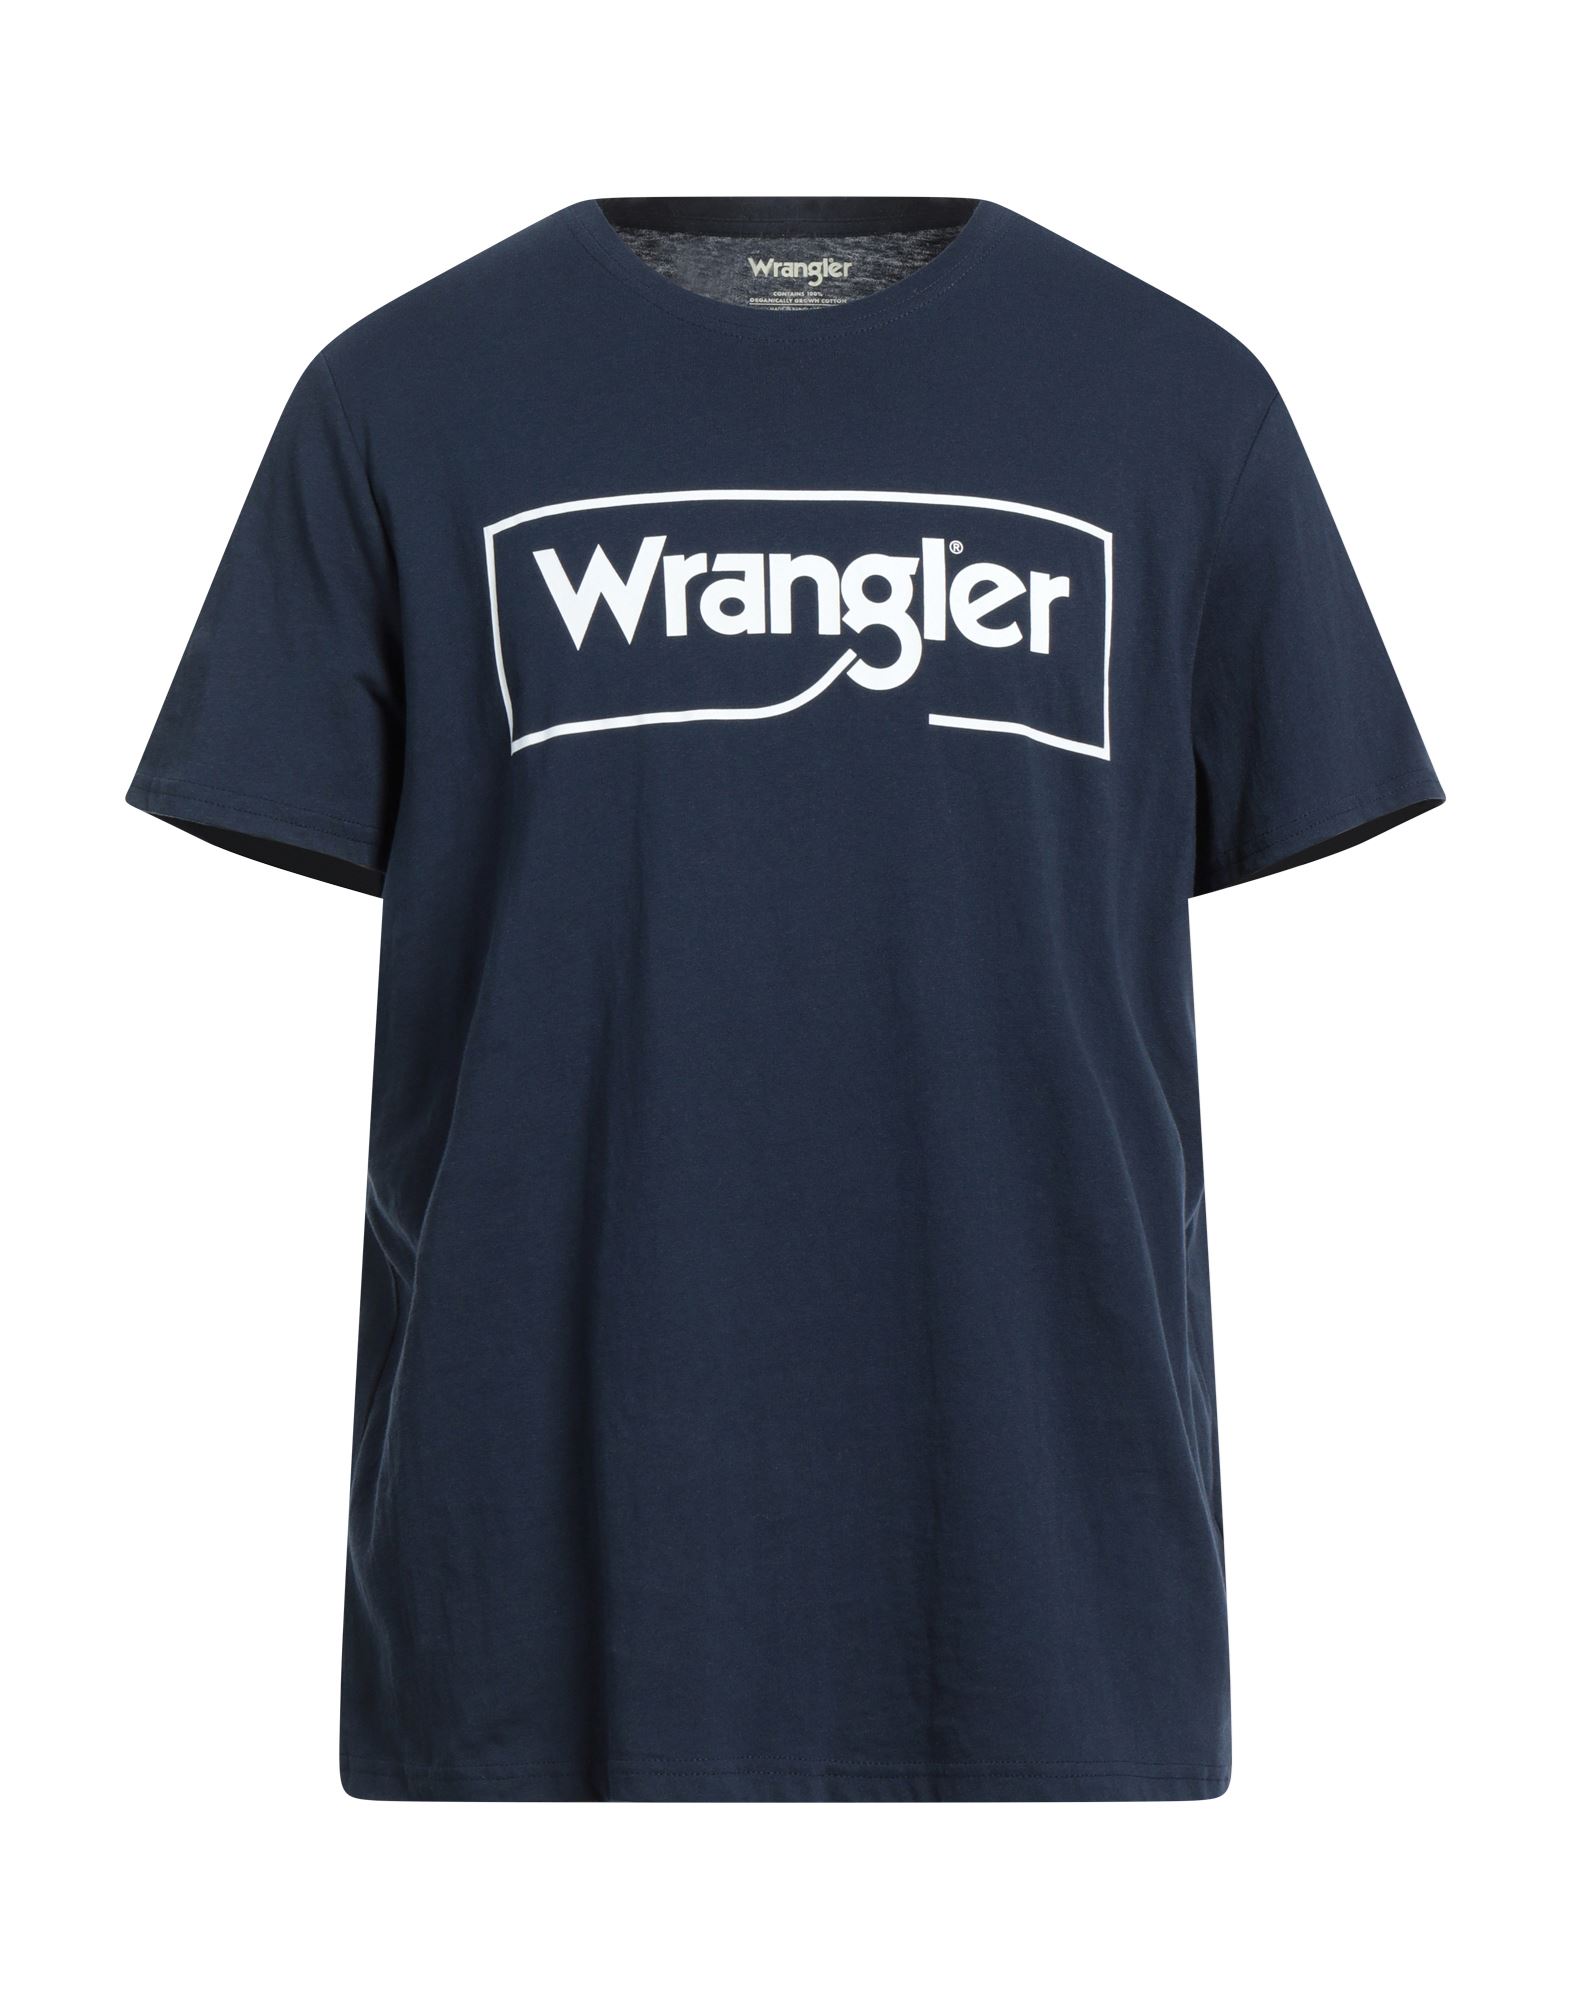 Wrangler T-shirts In Navy Blue